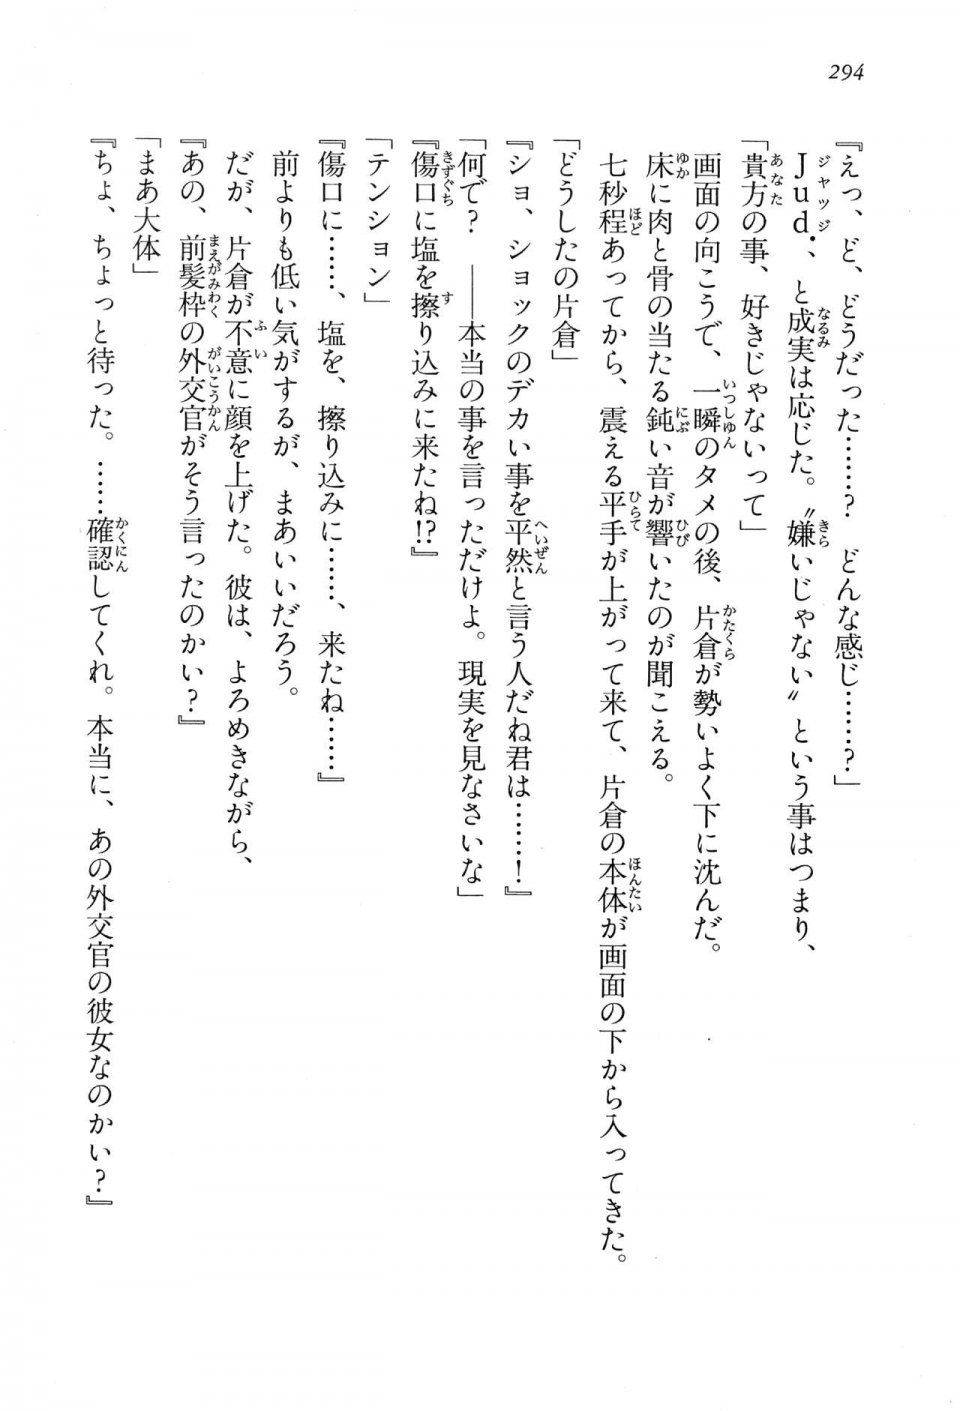 Kyoukai Senjou no Horizon LN Vol 15(6C) Part 1 - Photo #294